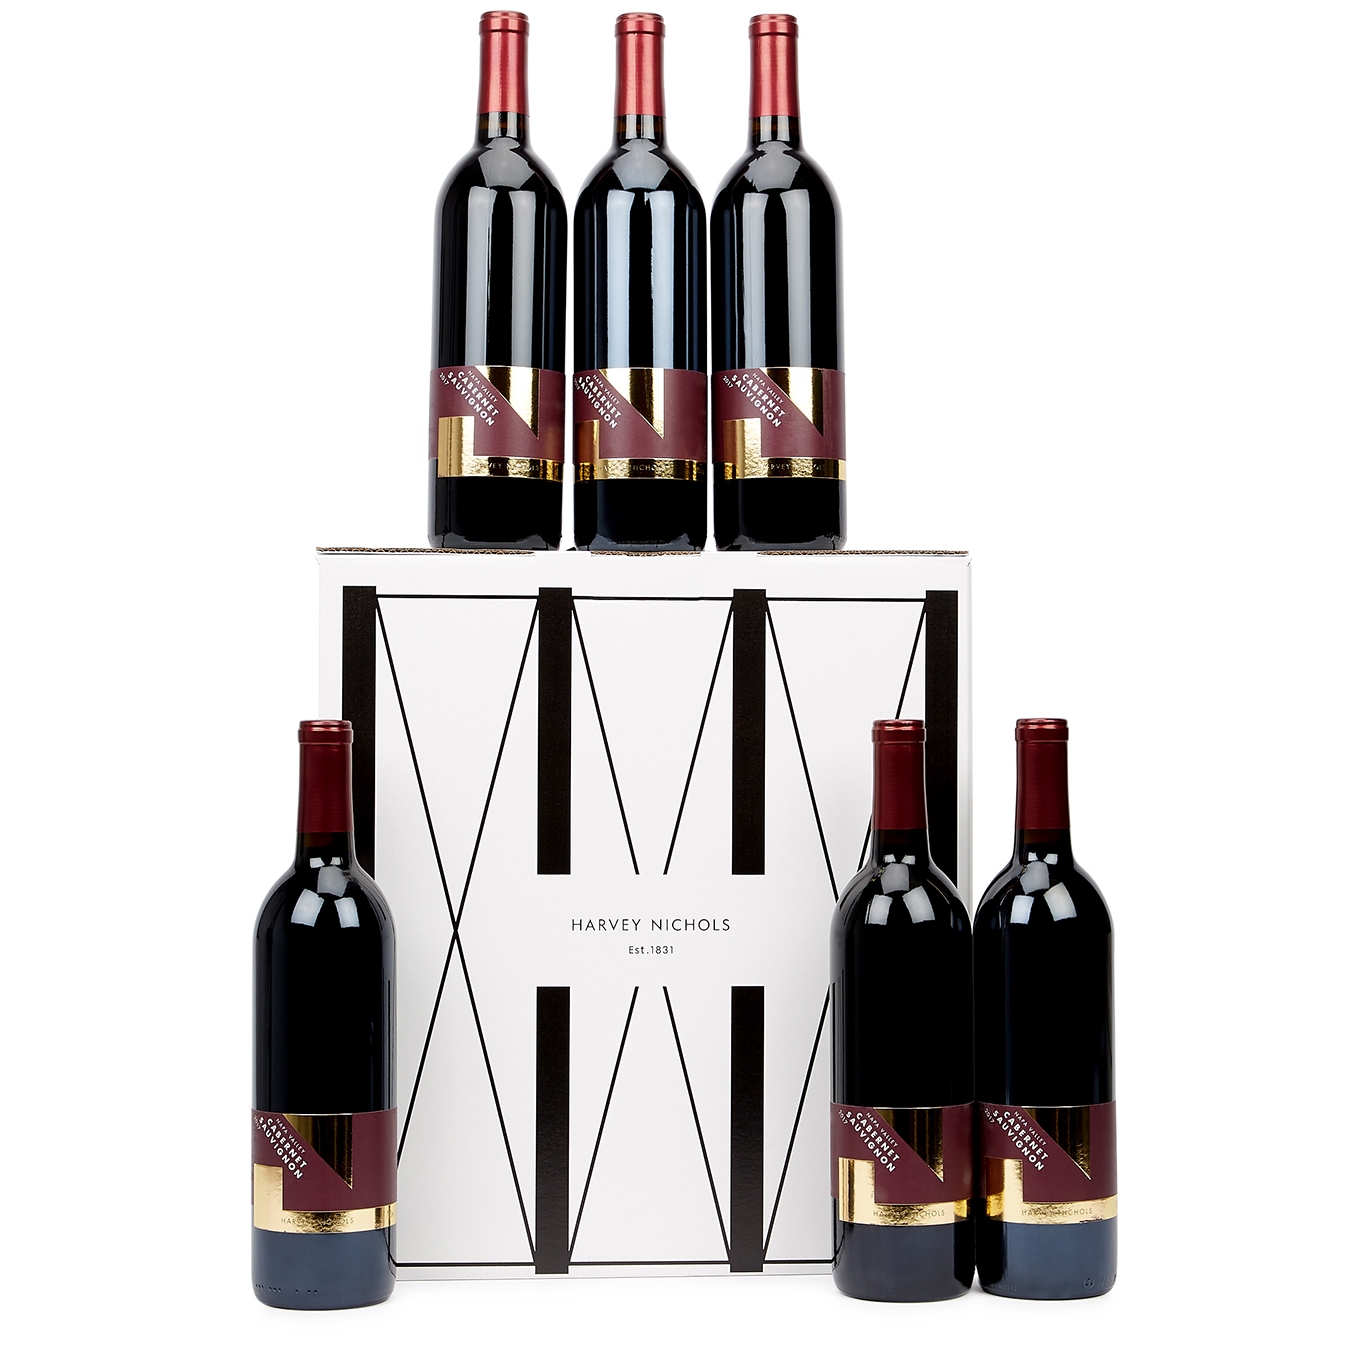 Harvey Nichols Napa Valley Cabernet Sauvignon, Wine, Case of six Wine Red Wine